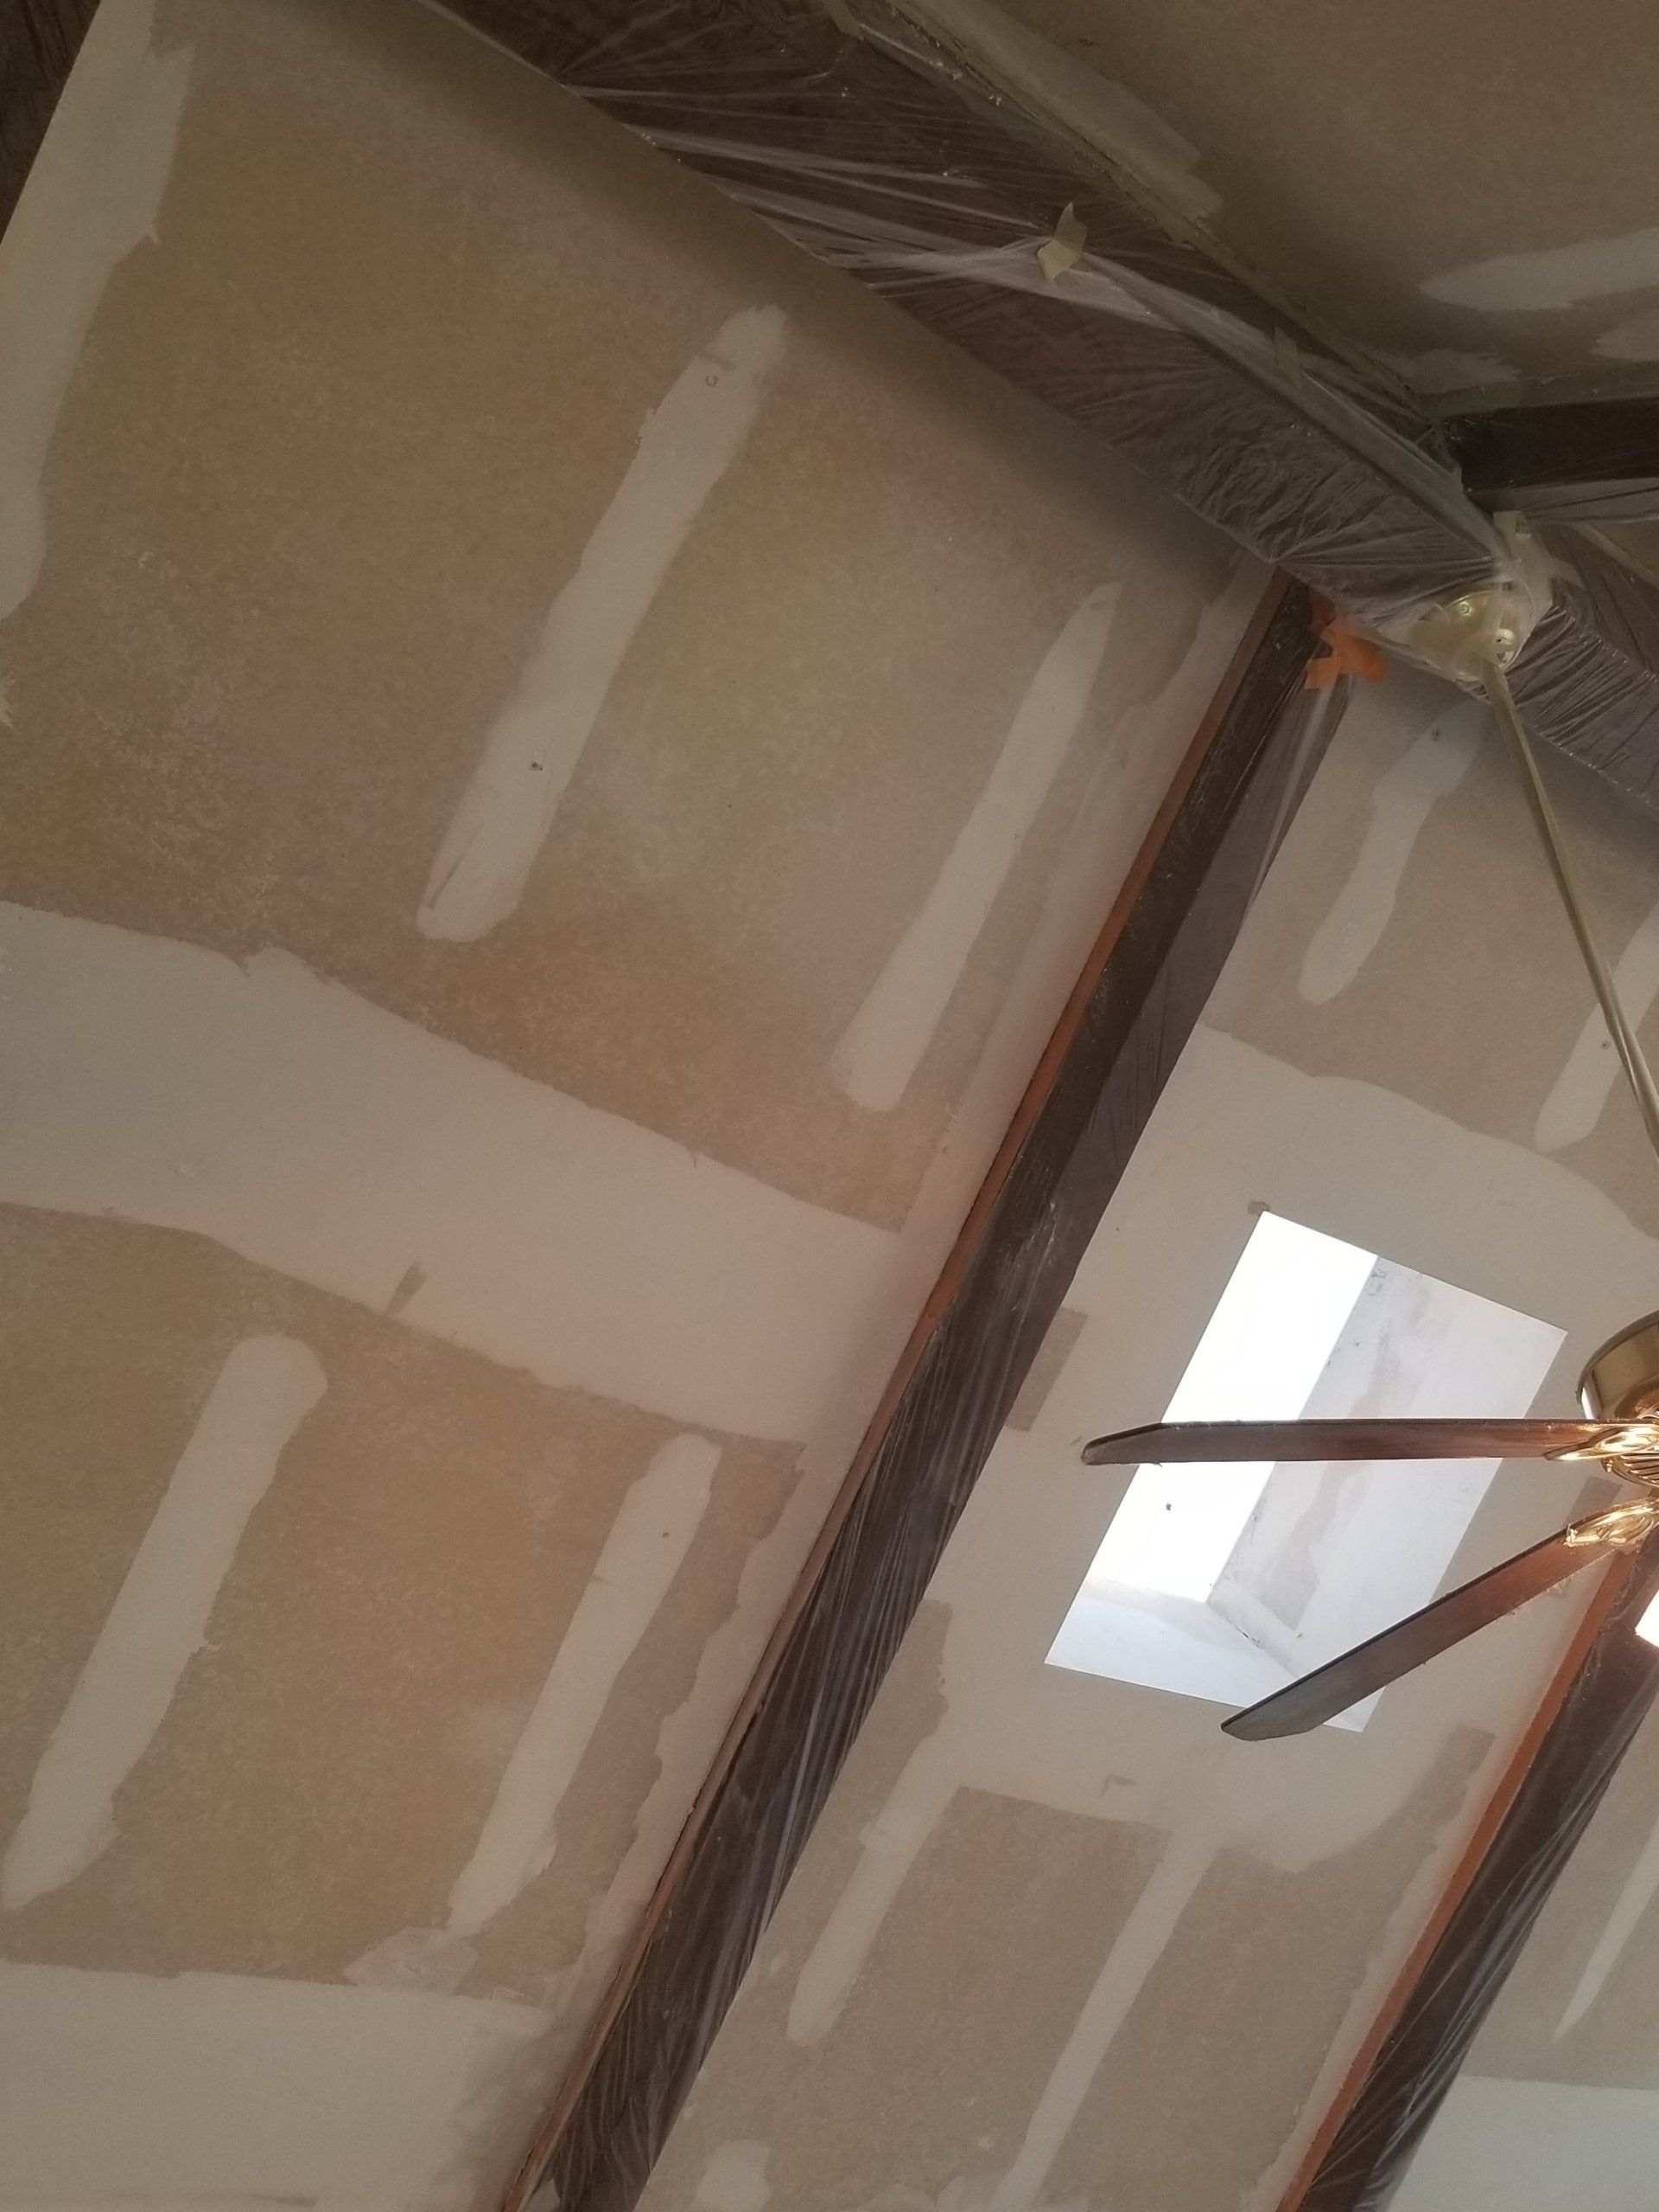 Popcorn ceiling removal in progress Kansas City, MO.